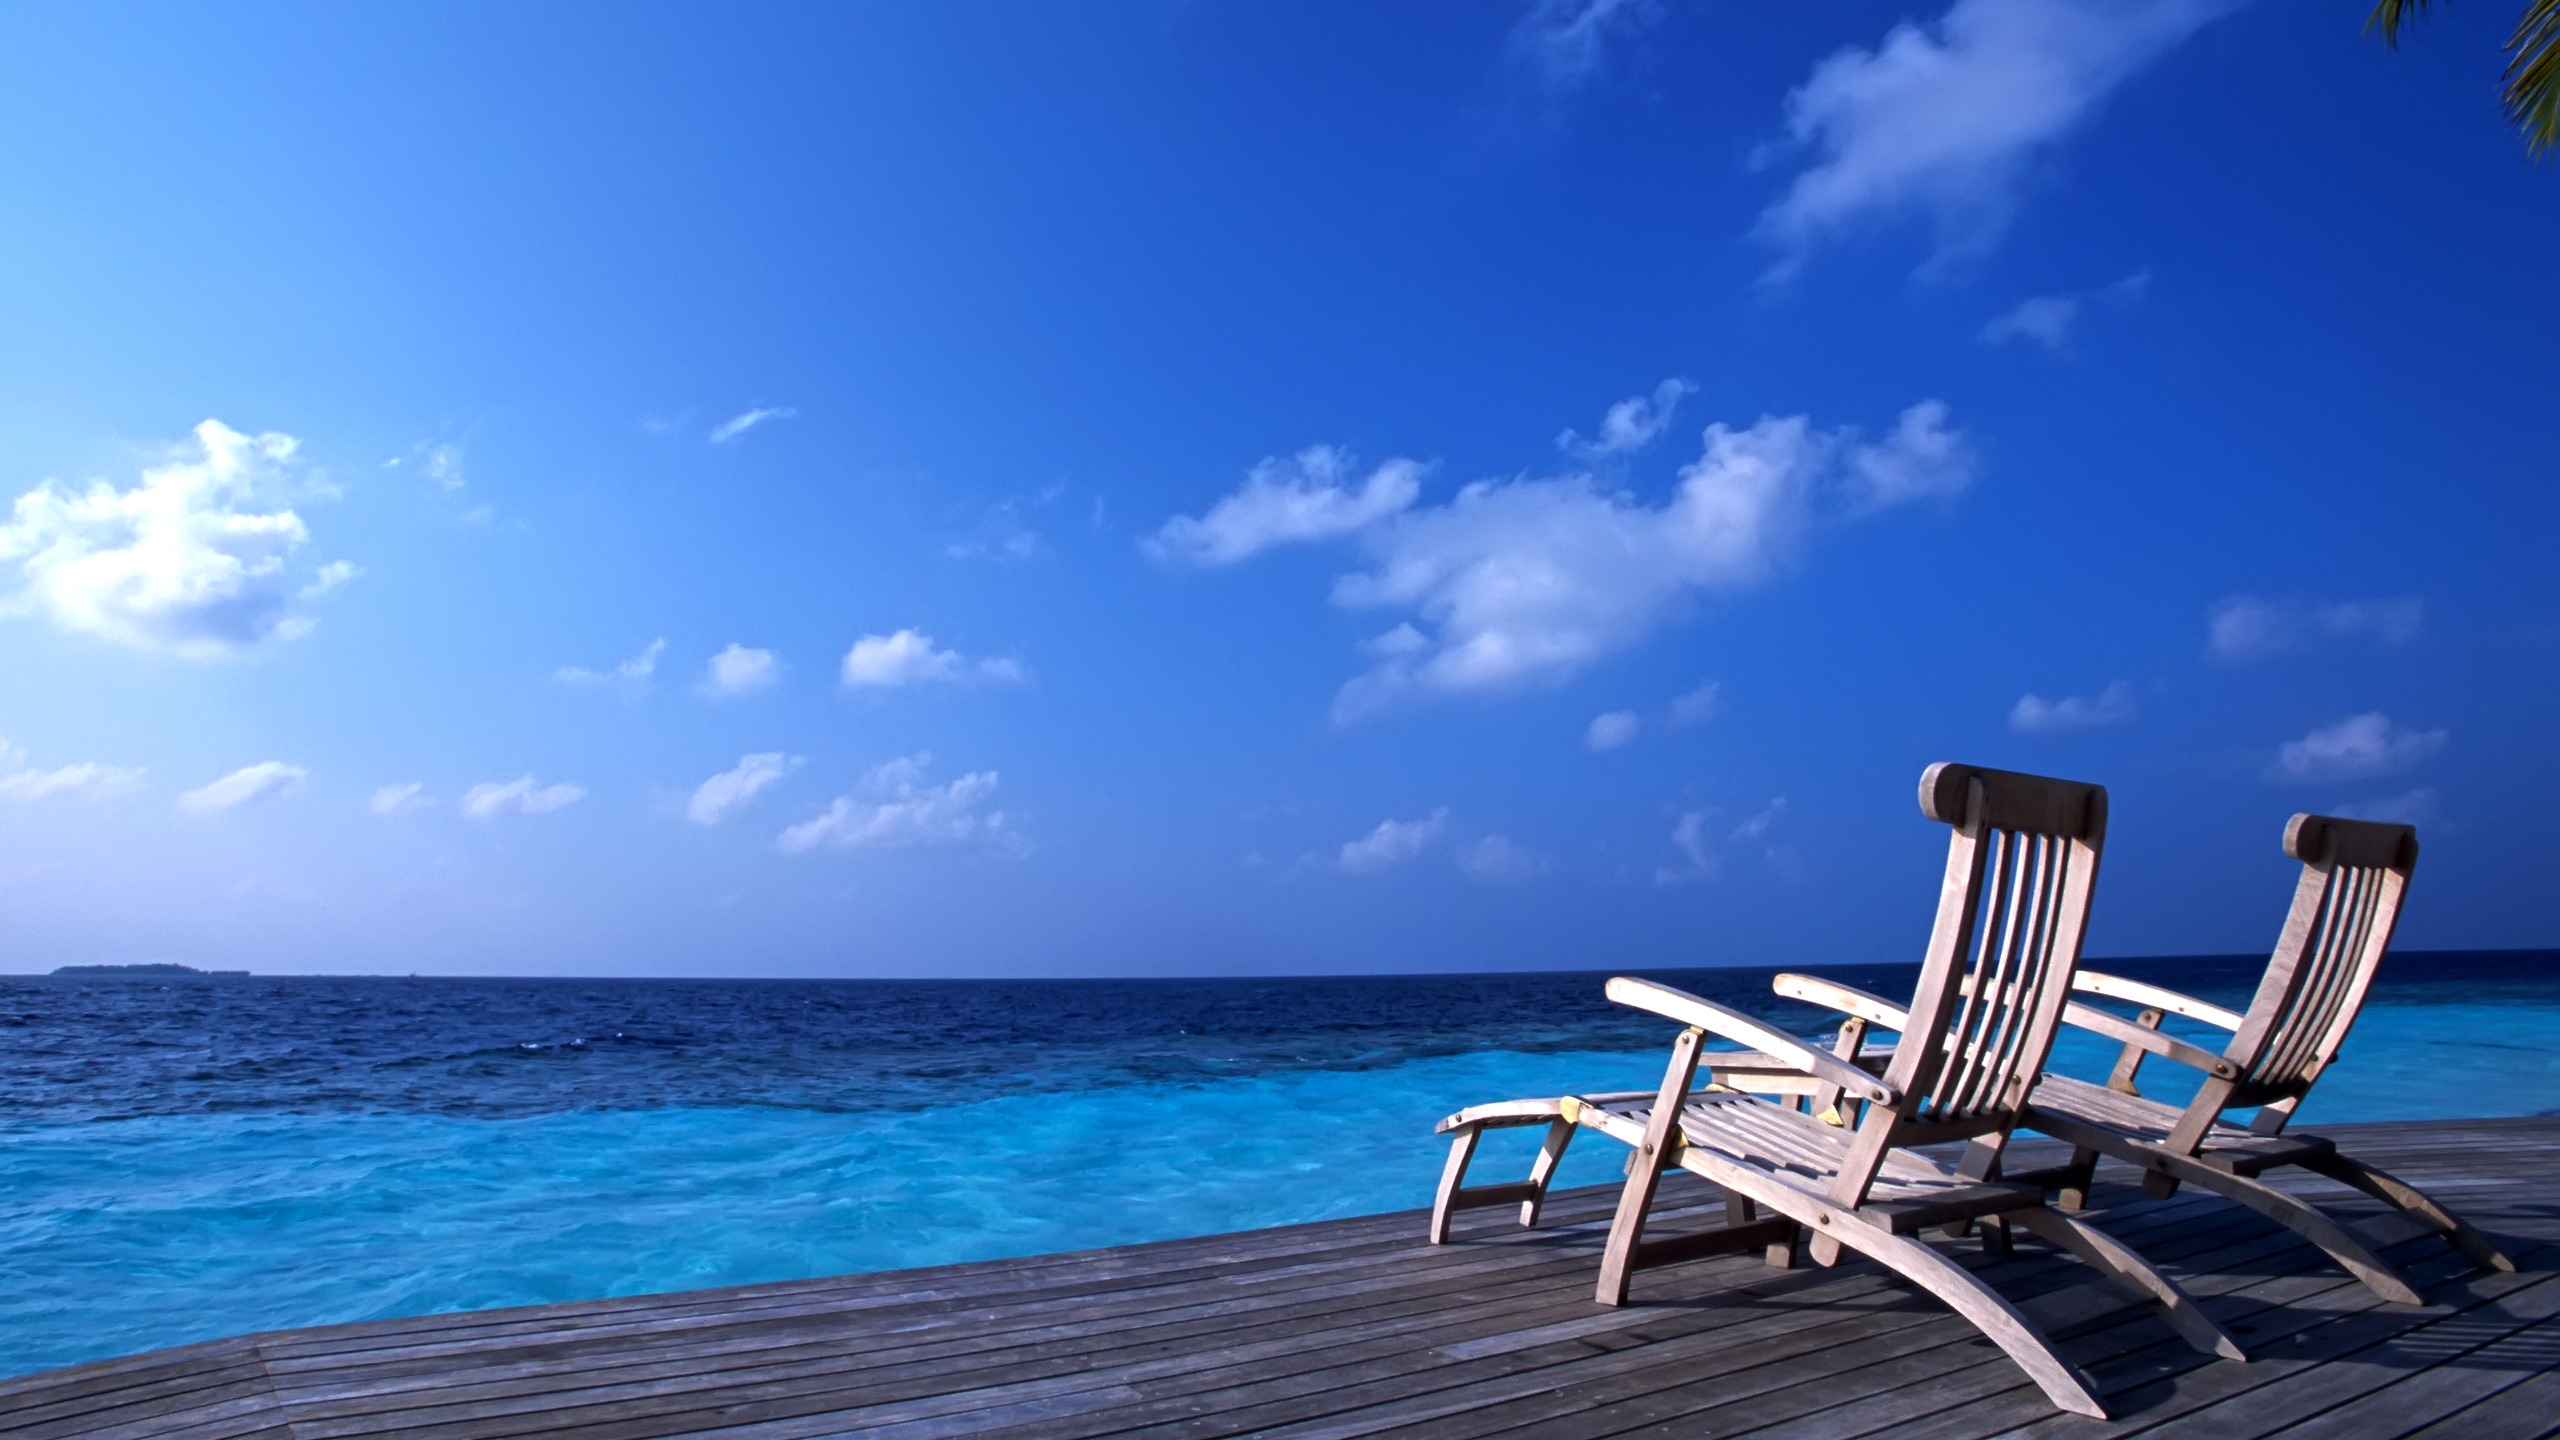 Maldives Beach for 2560x1440 HDTV resolution